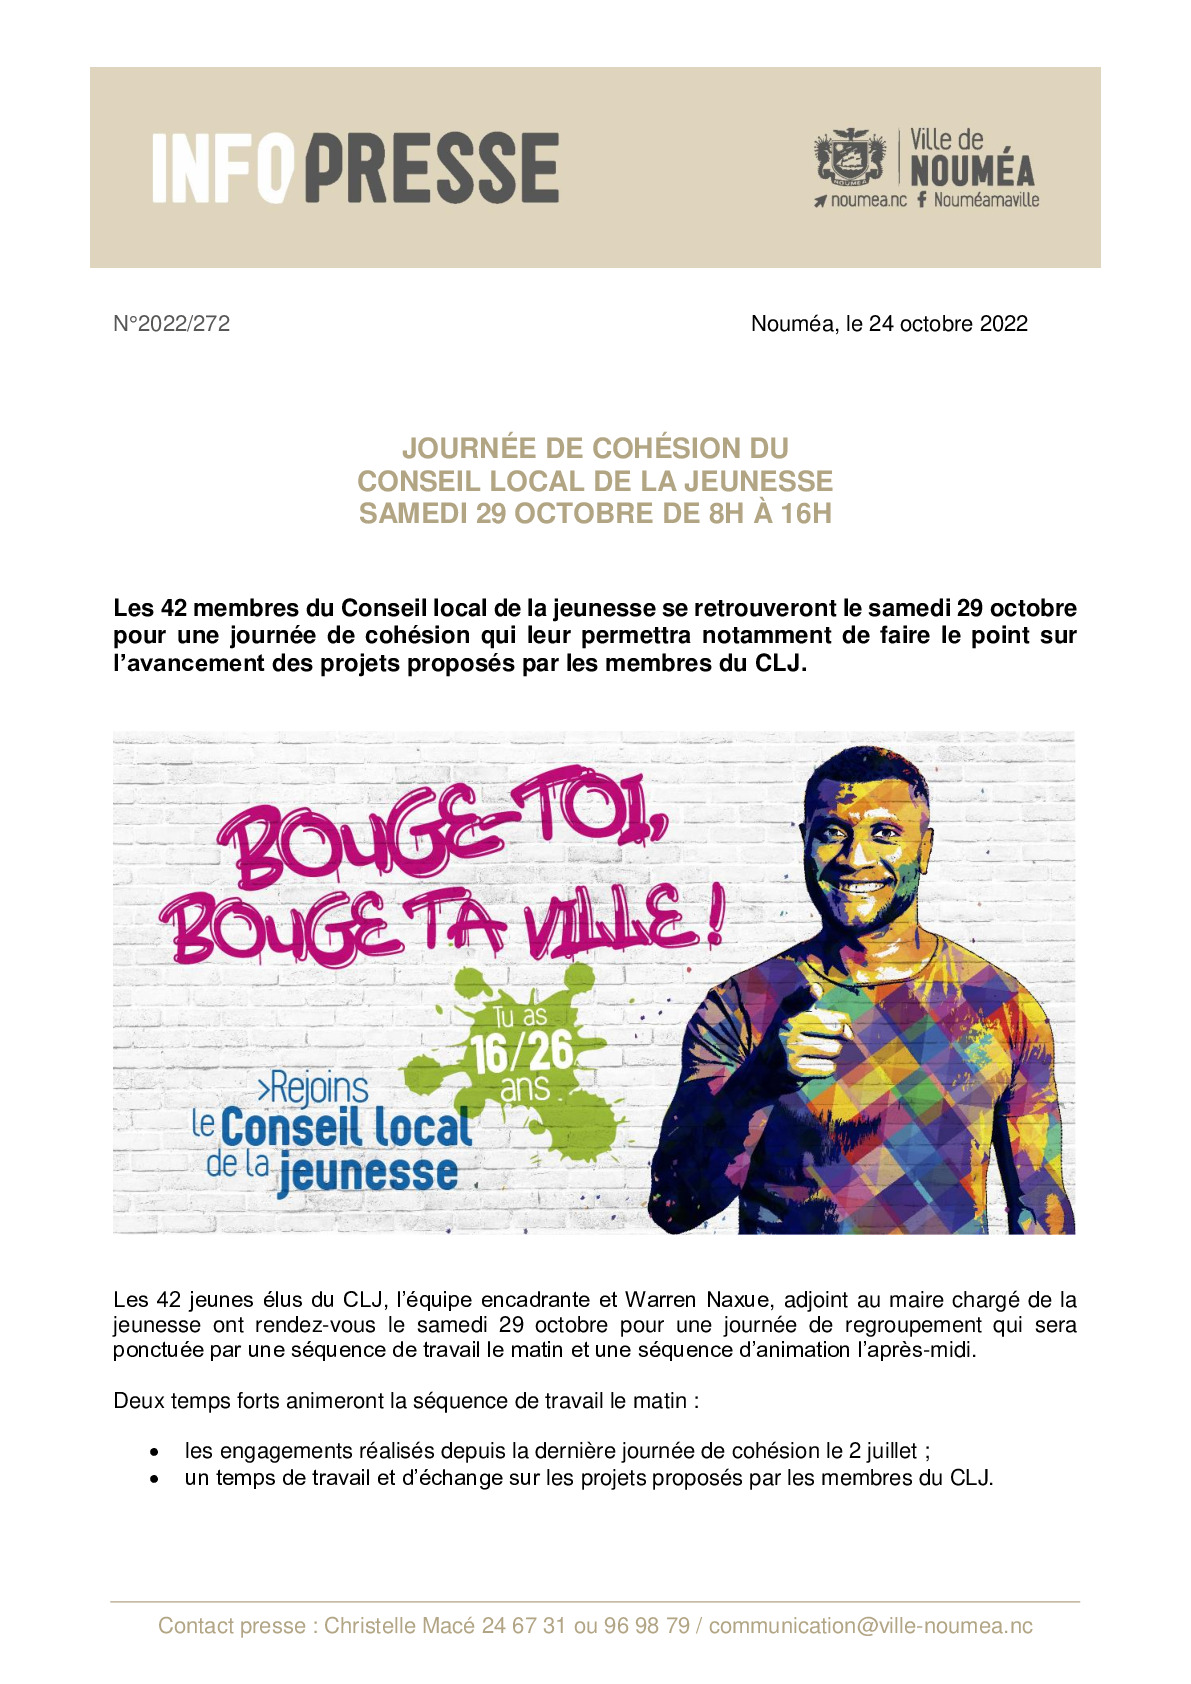 IP 272 Journee de cohesion Conseil local de la jeunesse.pdf